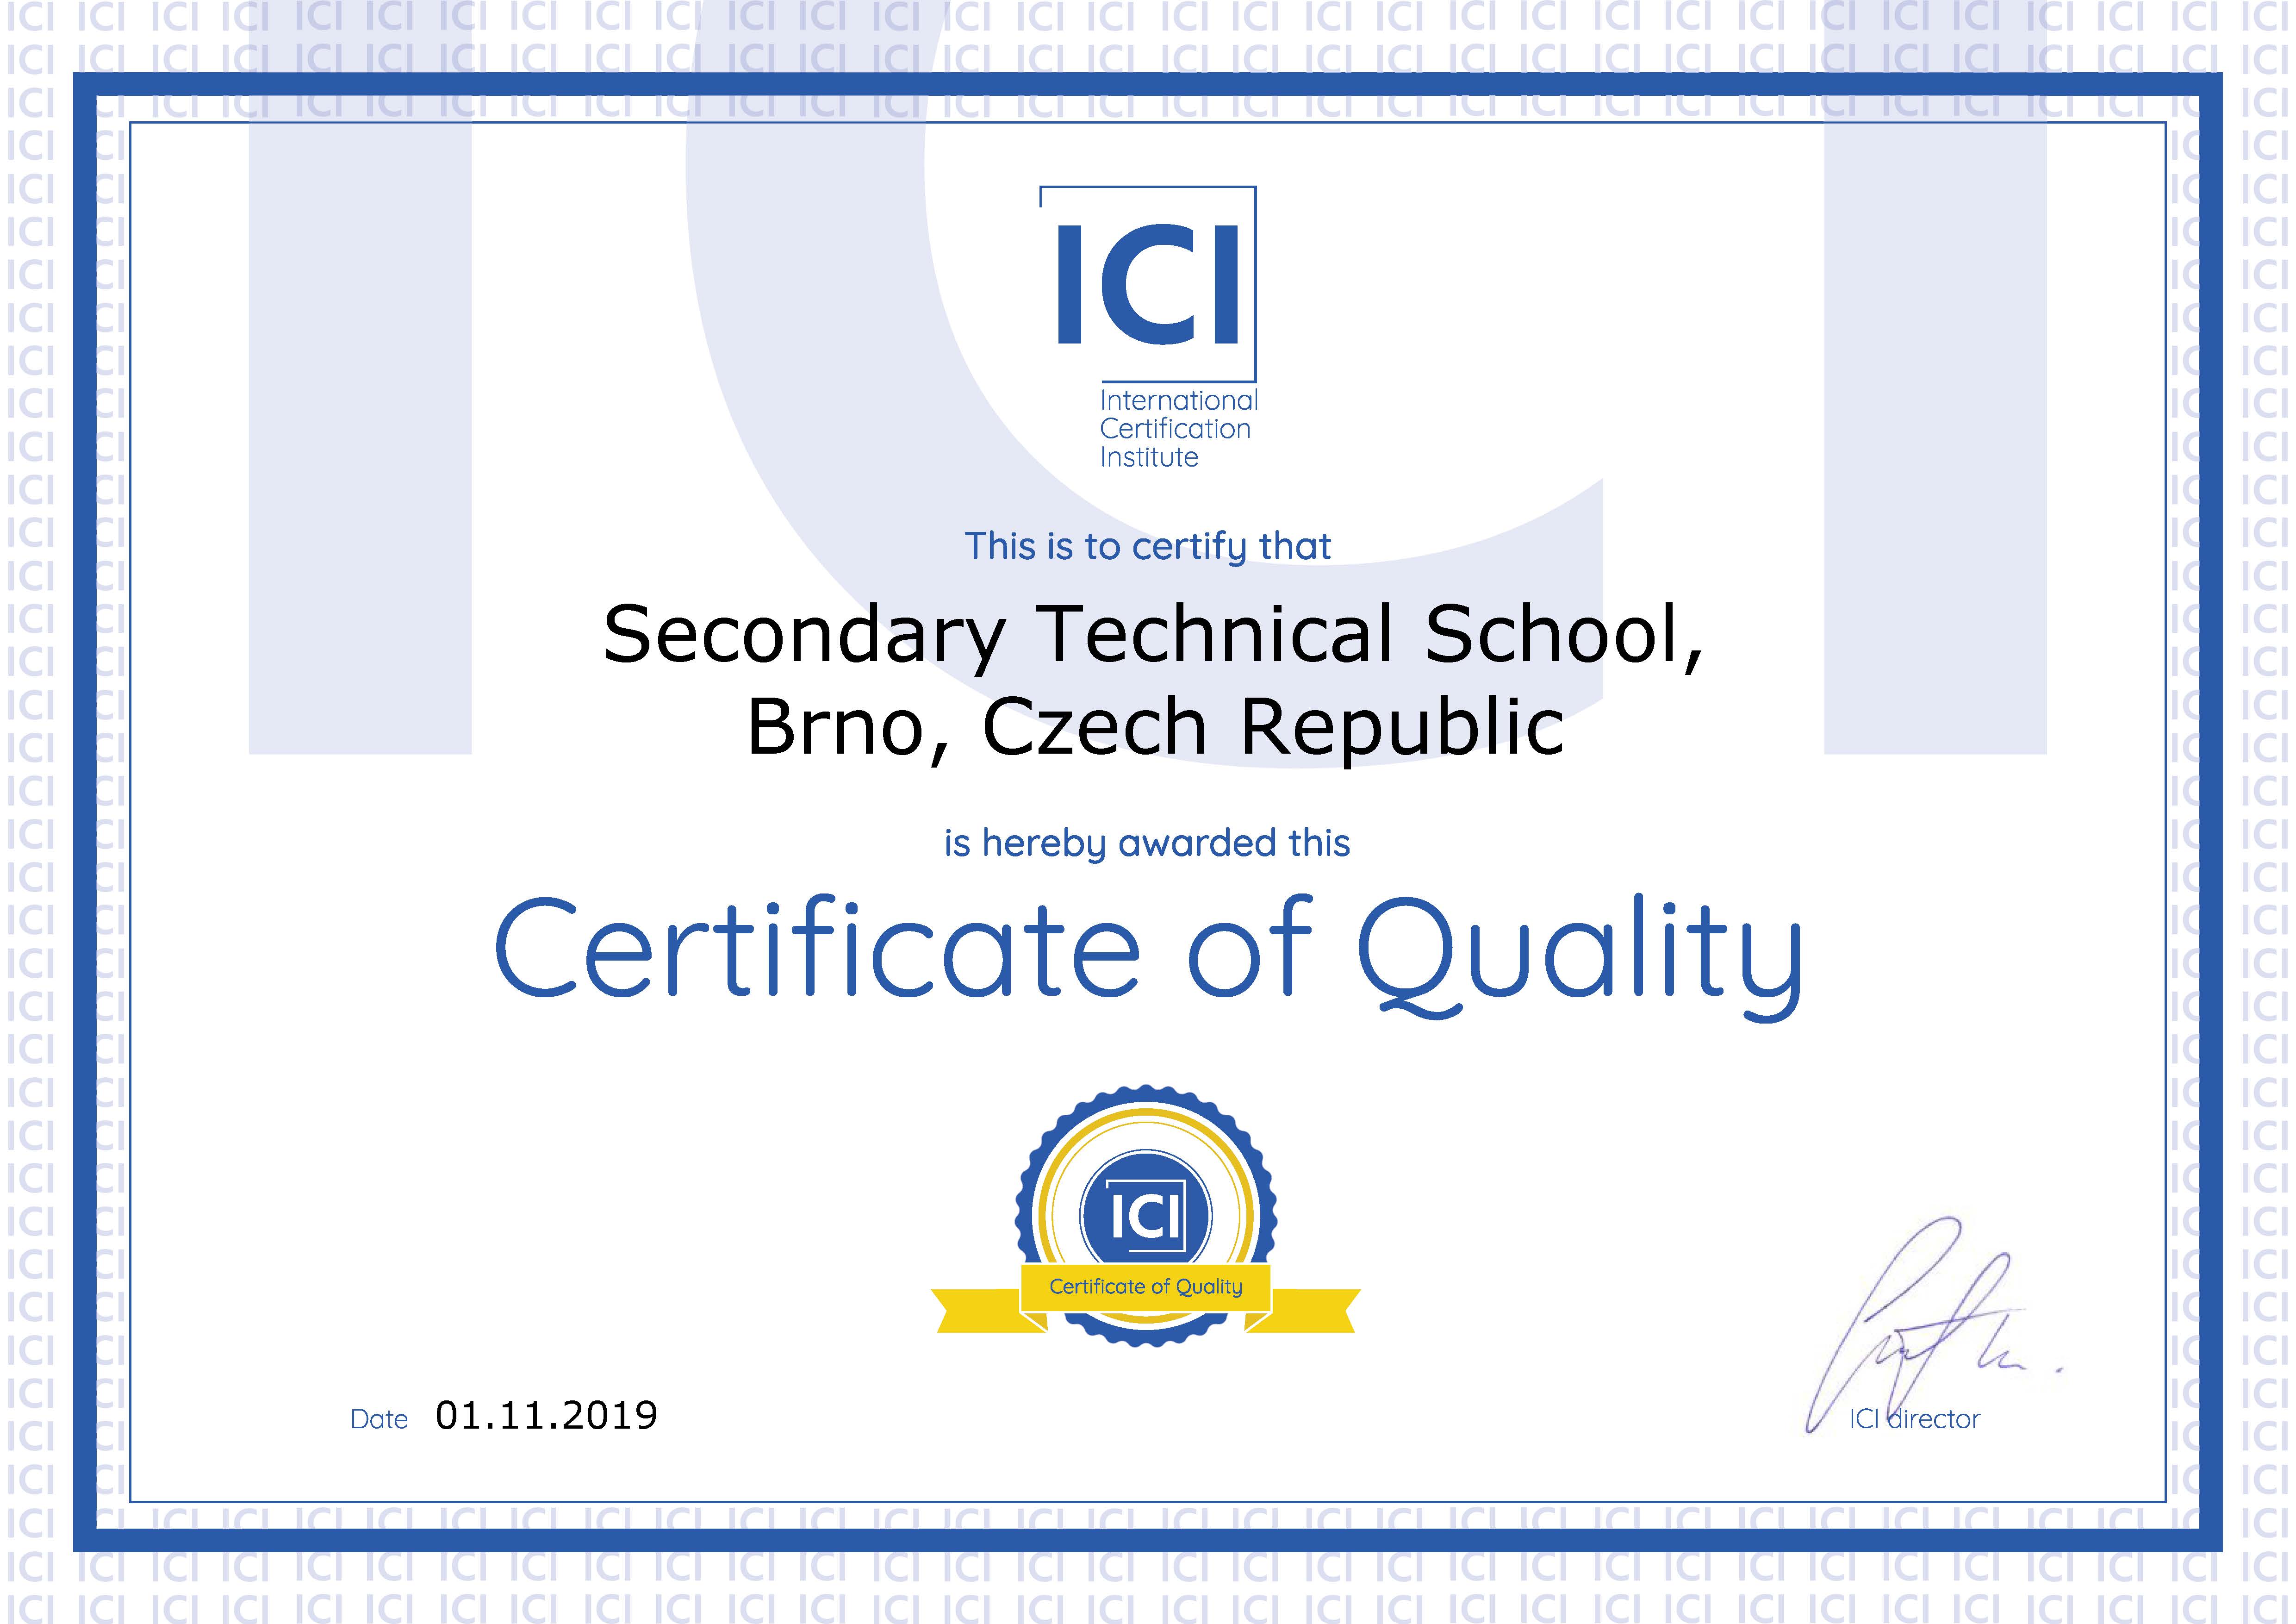 ICI Institution certificate